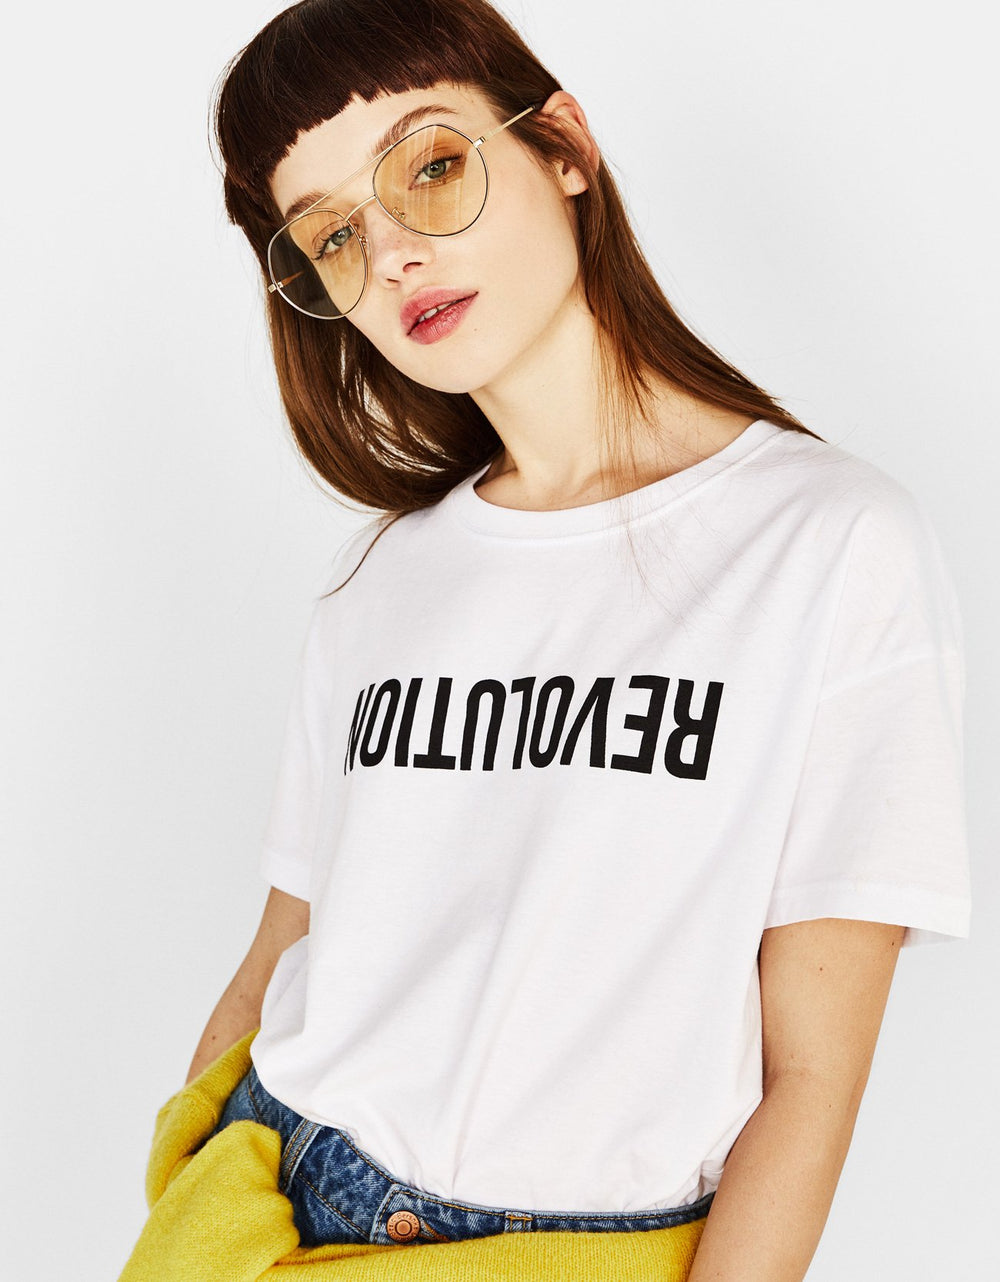 Cotton T-shirt with slogan